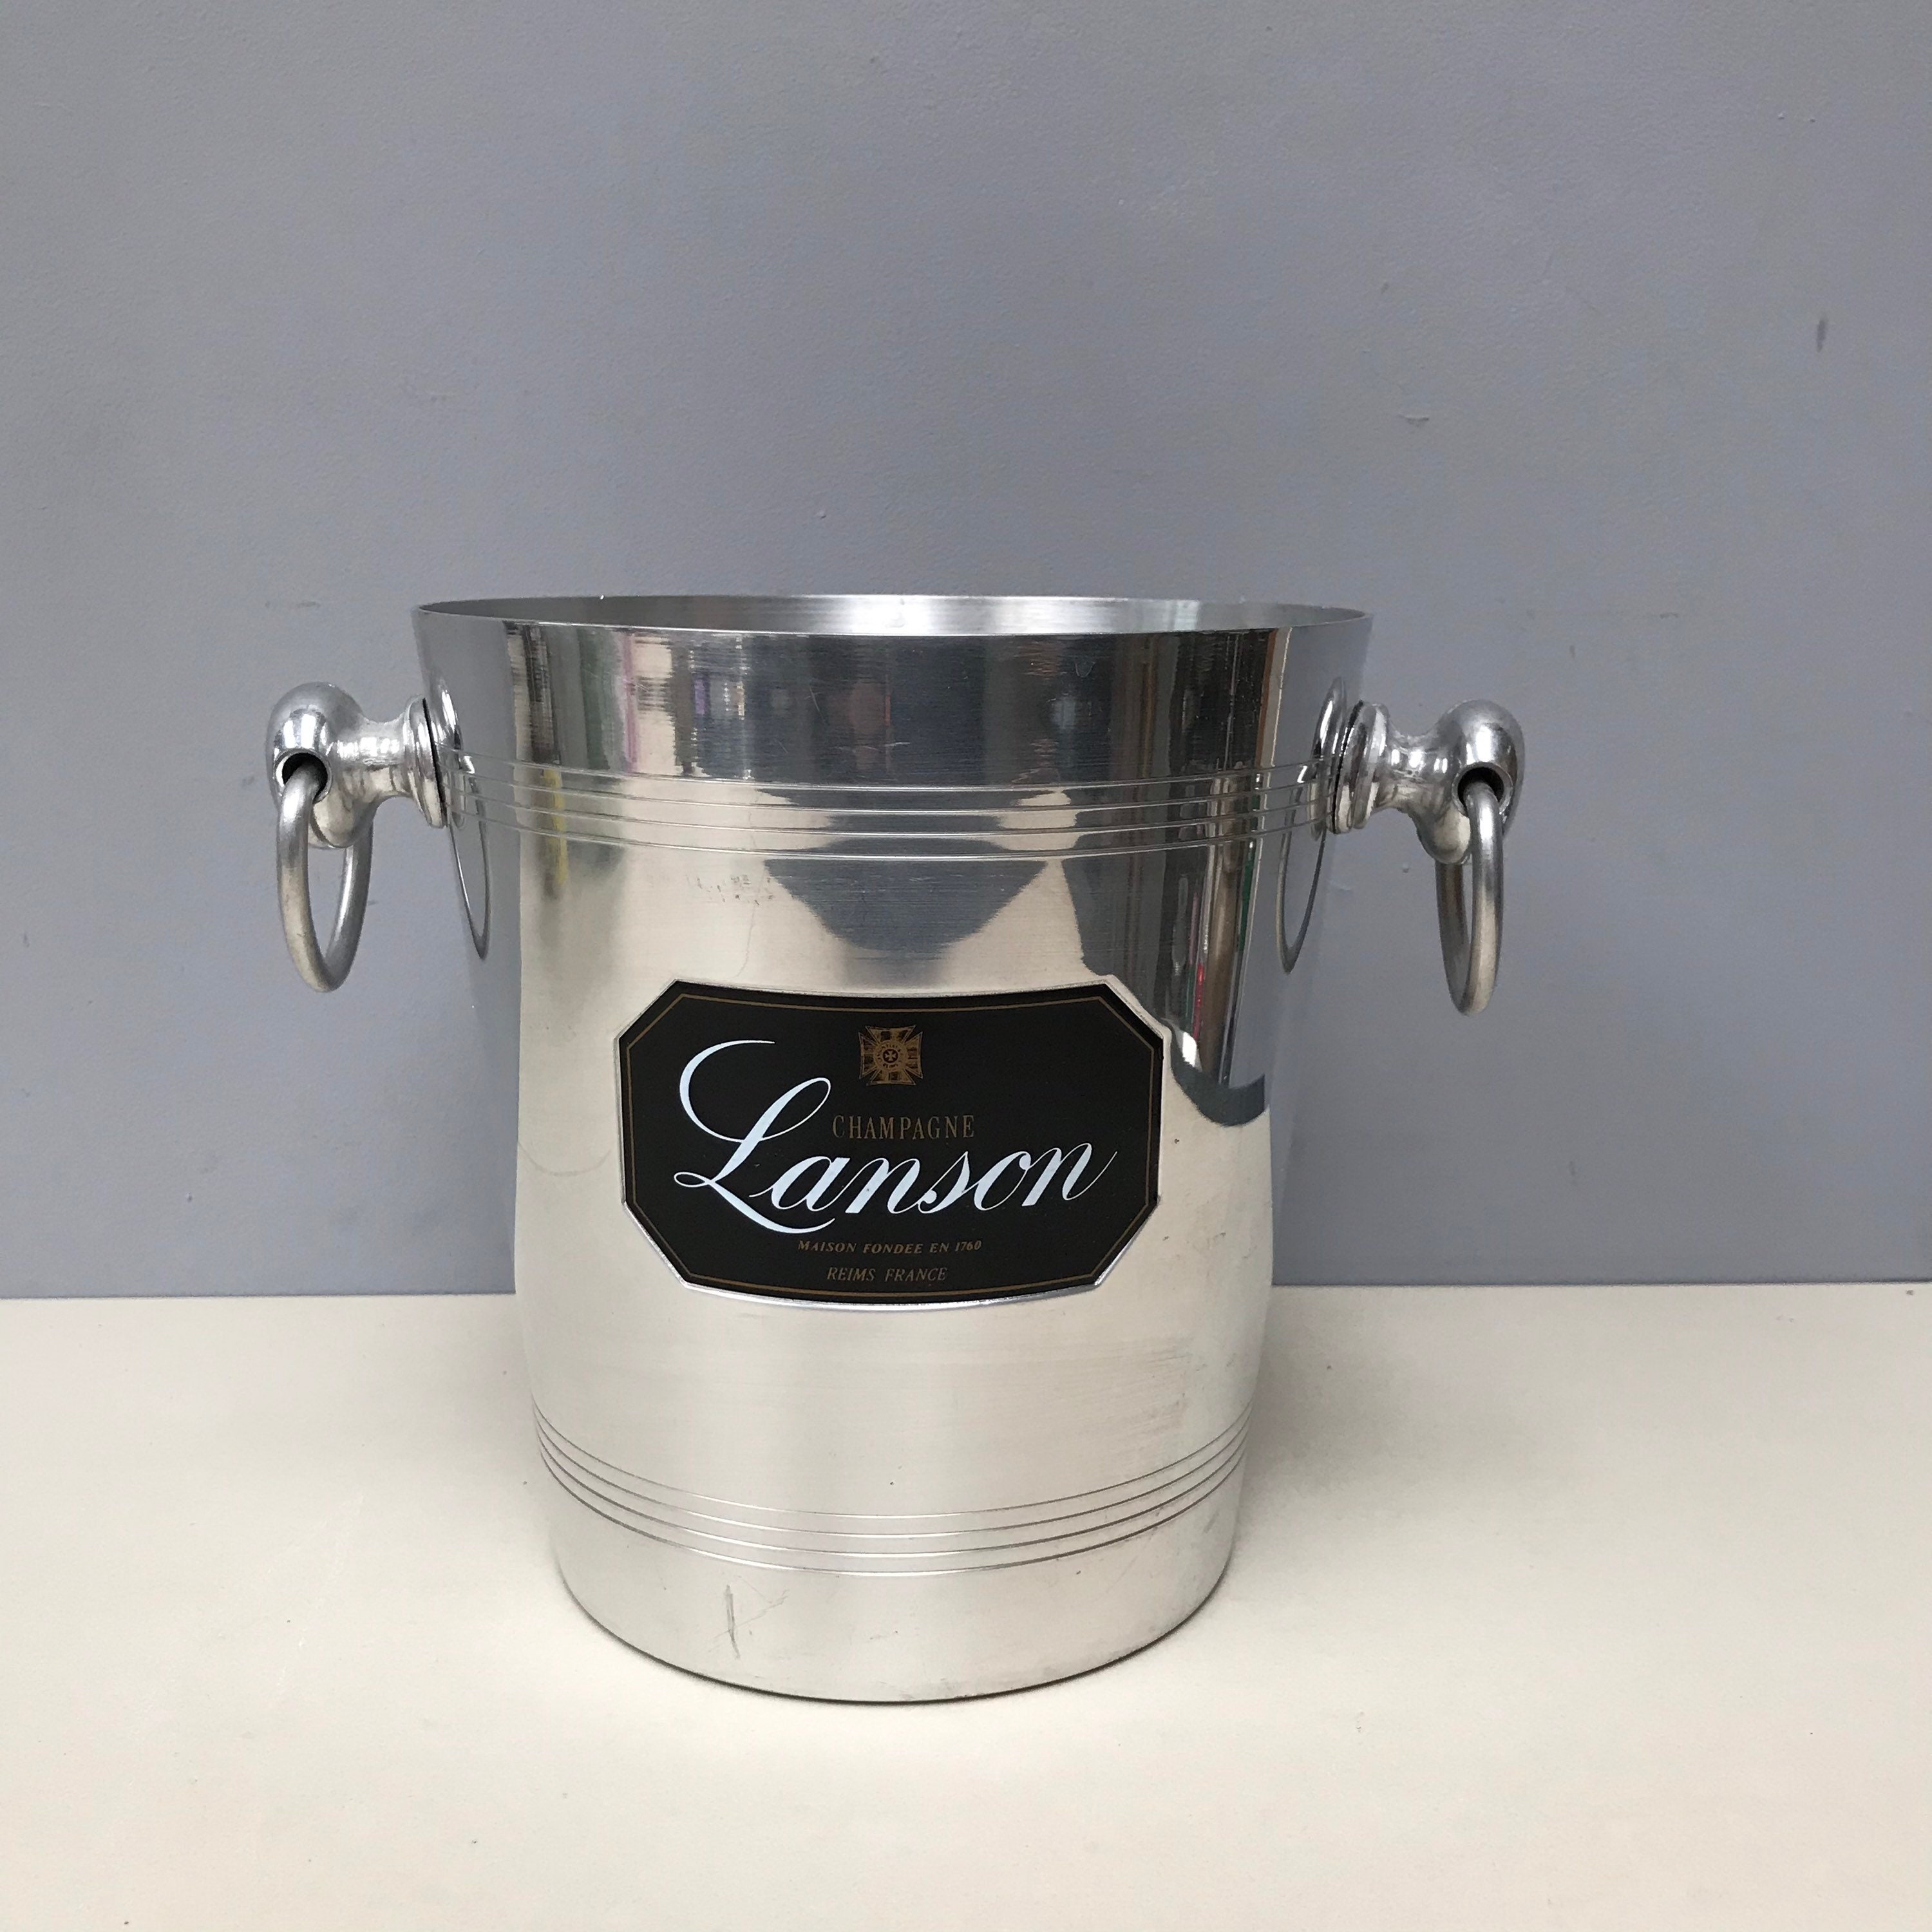 Lanson Champagne Français Bistro Cooler Ice Bucket. Shabby Vintage Aluminium Silver Coloured